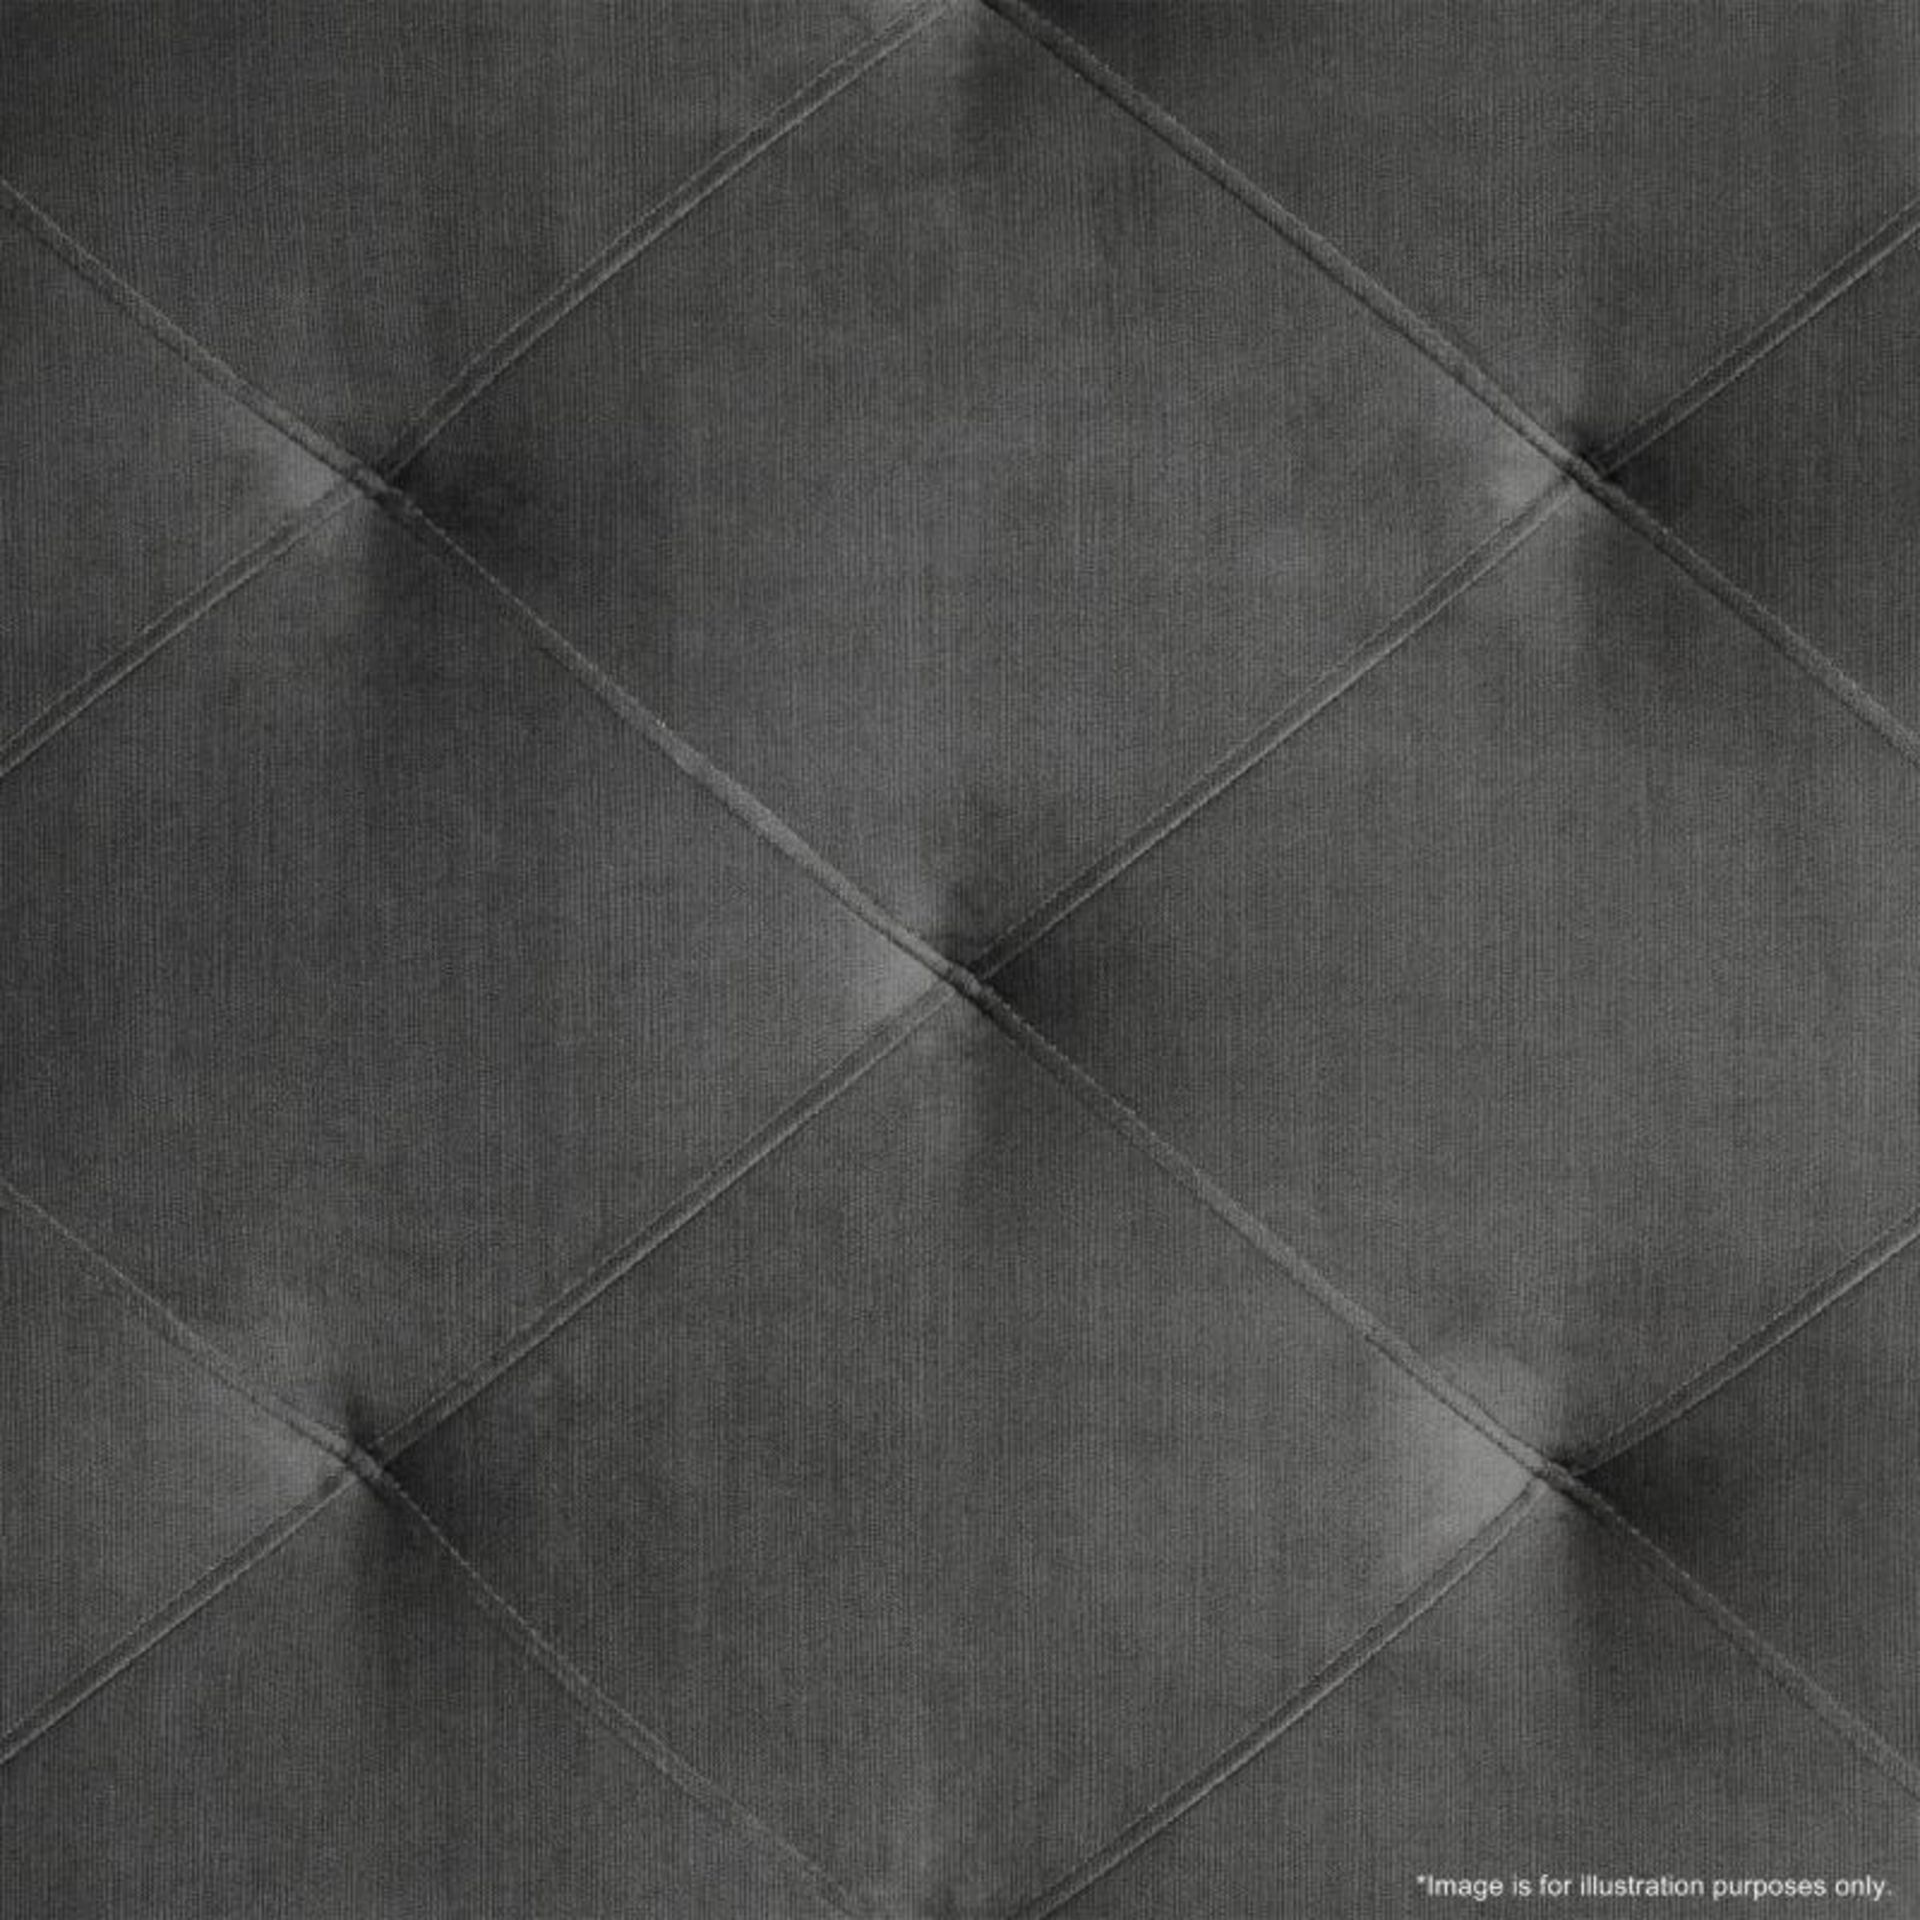 1 x Eichholtz 'Cesare ' Chesterfield-Inspired Upholstered Headboard In A Granite Grey Velvet - Dime - Image 4 of 10